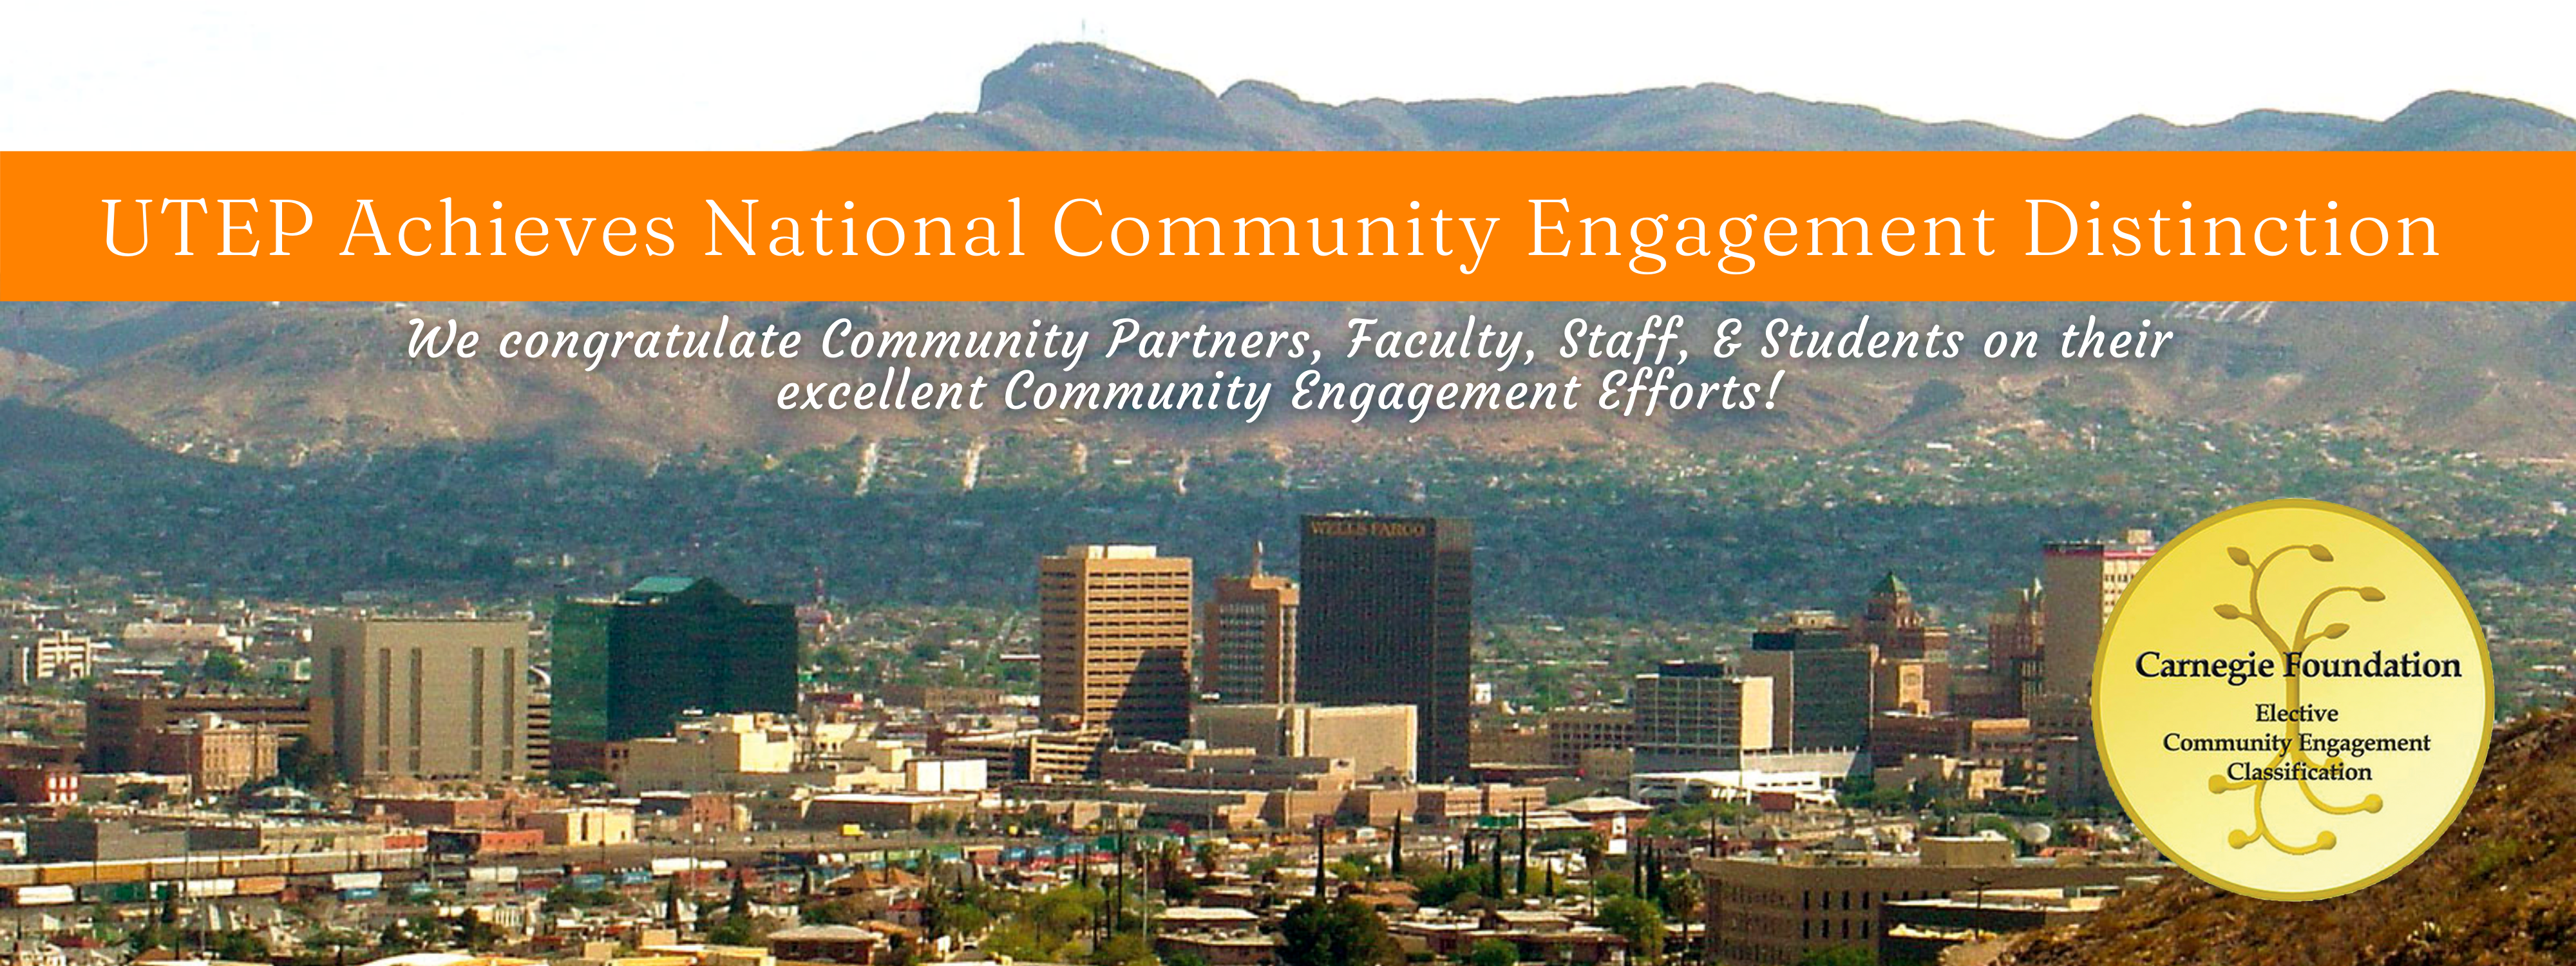 UTEP Achieves National Community Engagement Distinction 